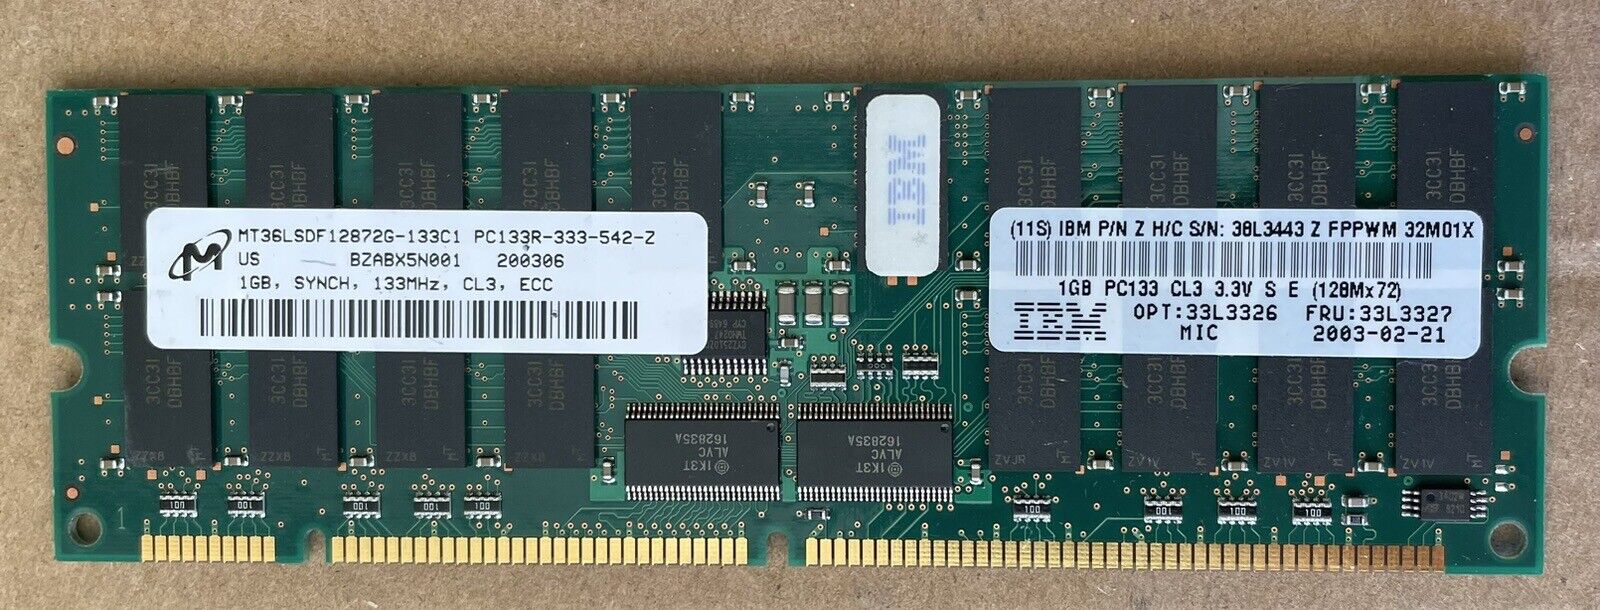 Micron / IBM MT36LSDF12872G-133C1 / 33l3327 PC133 1GB ECC REG (FOR SERVER)